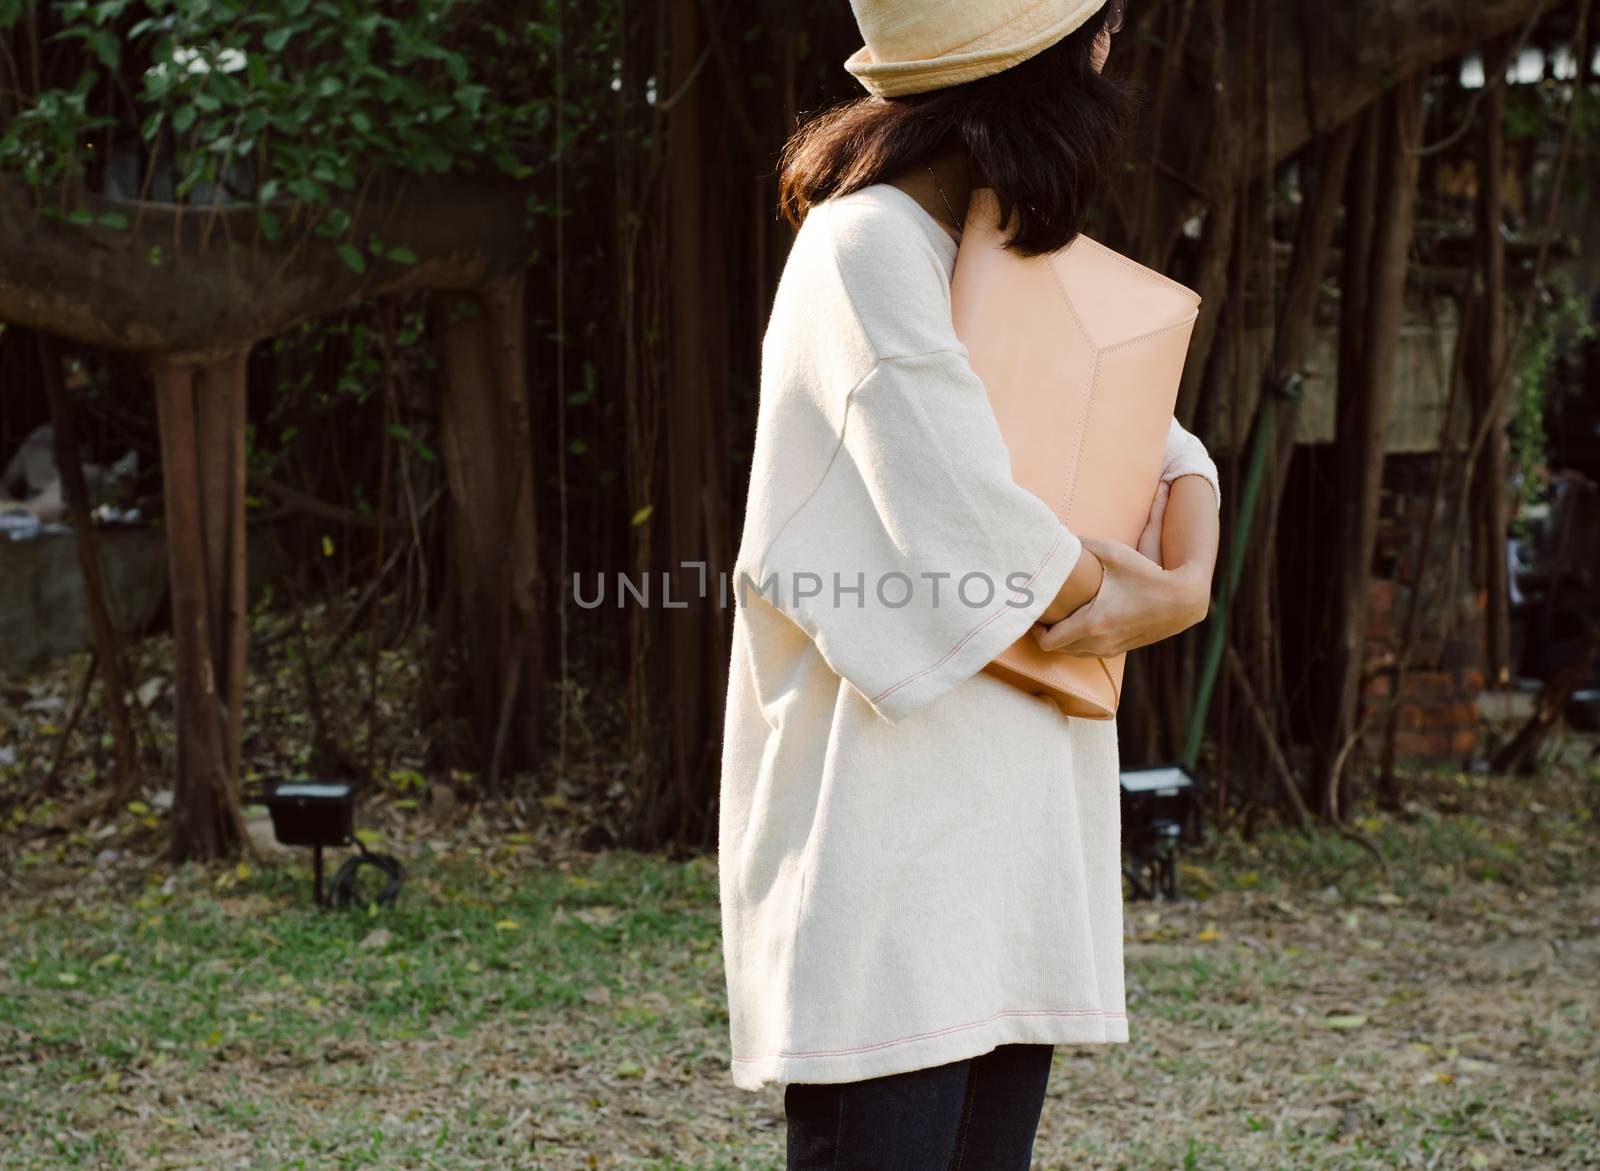 Young fashion girl with handbag on nature background